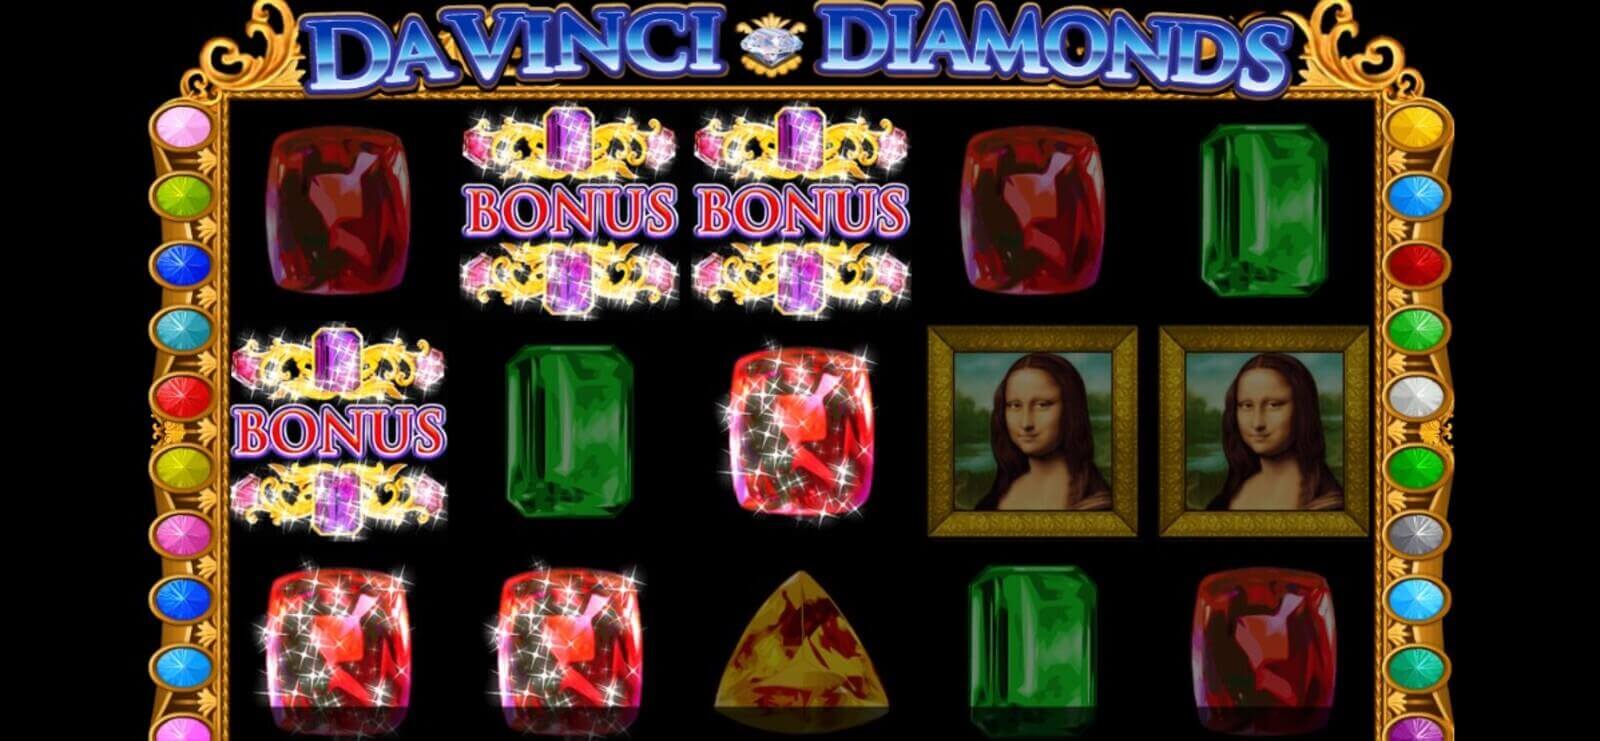 Jugar a la tragamonedas gratis Vinci Diamonds de IGT